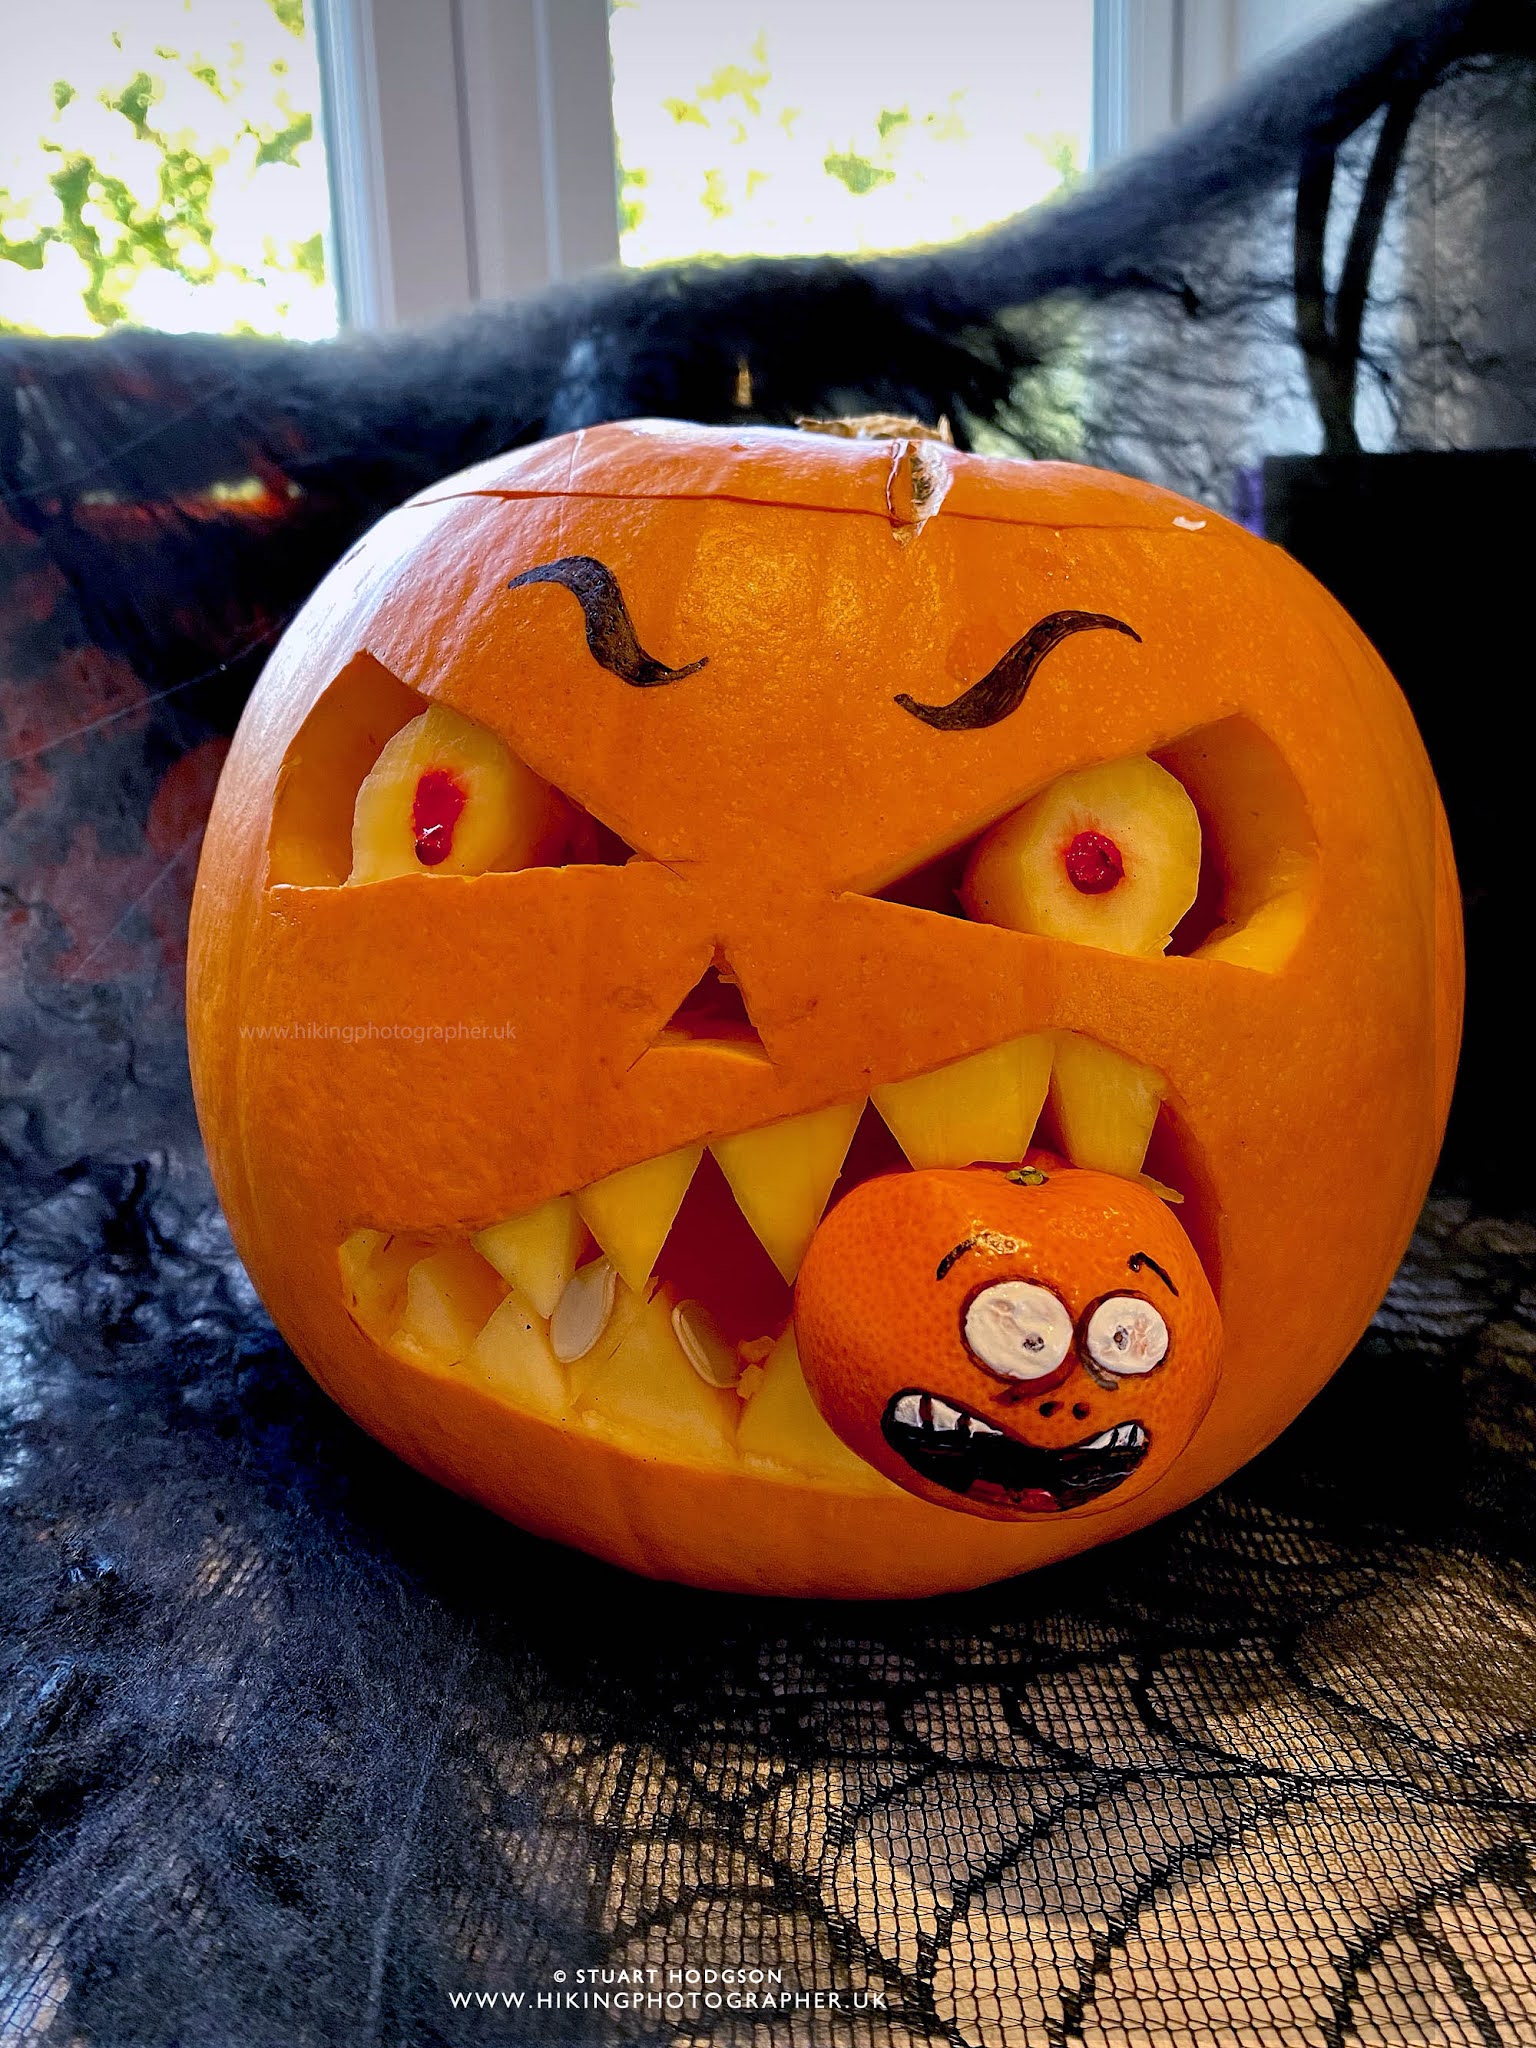 Best Pumpkin Carving Ideas For Halloween - 5 Quick & Scary Pumpkin Face  Designs | The Hiking Photographer